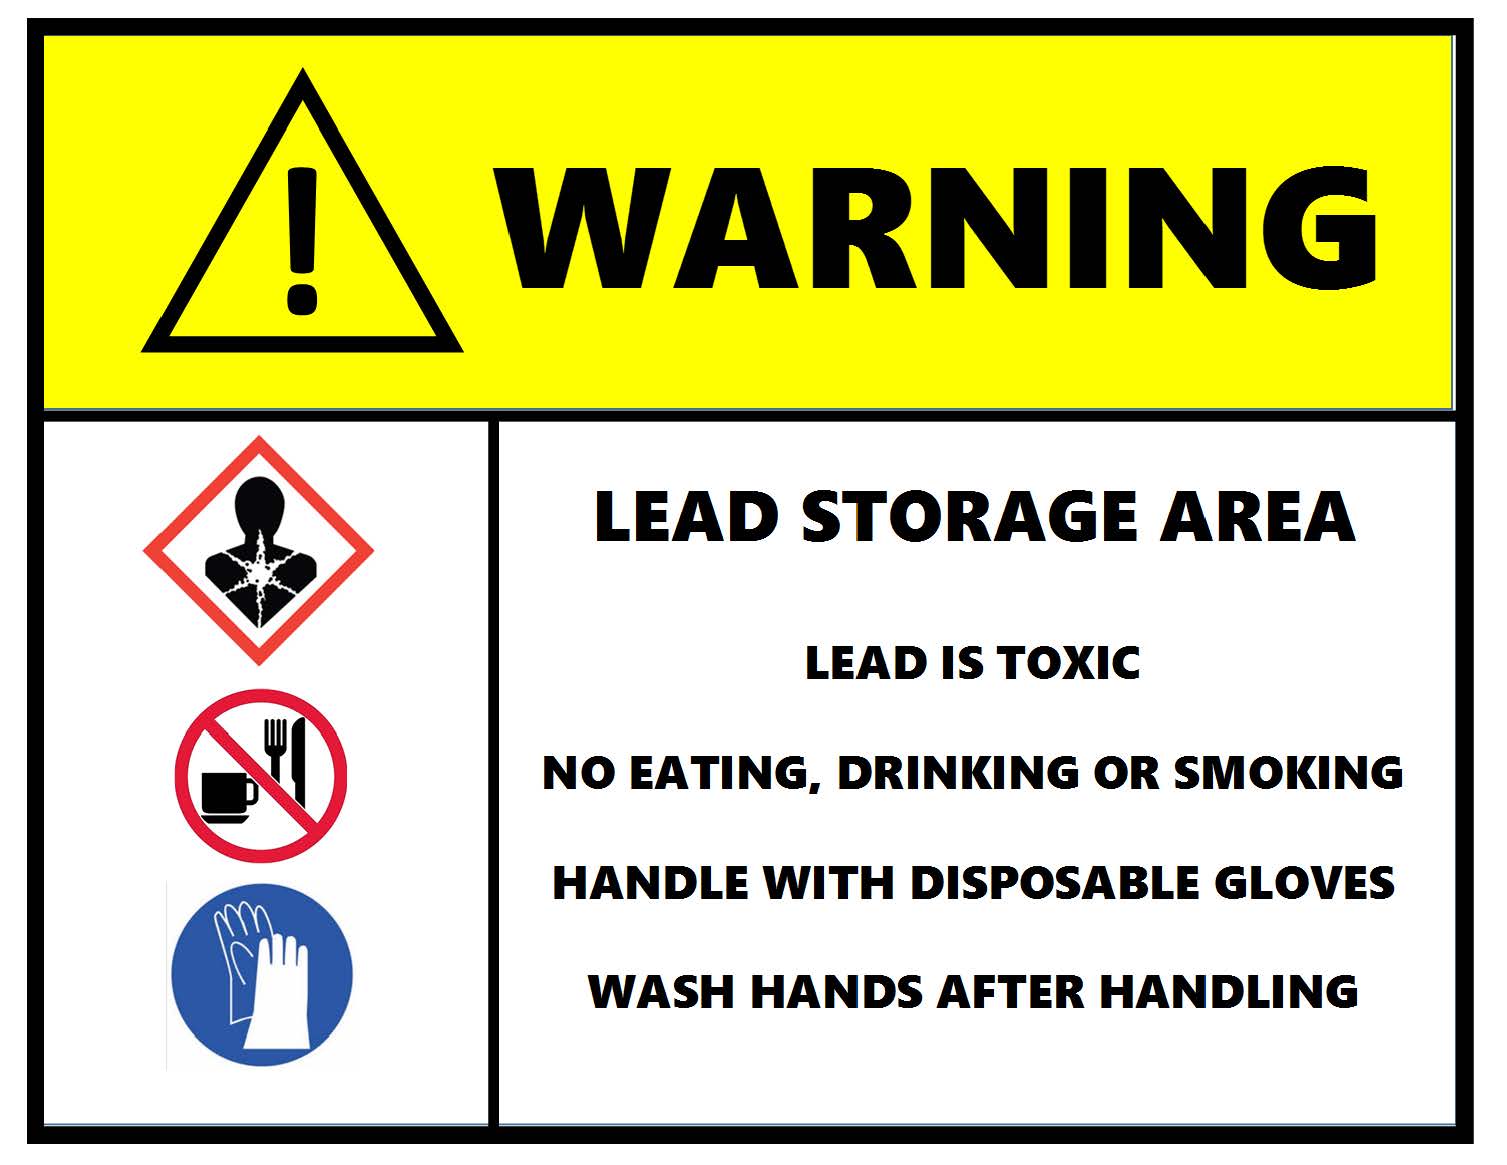 lead storage area warning sign